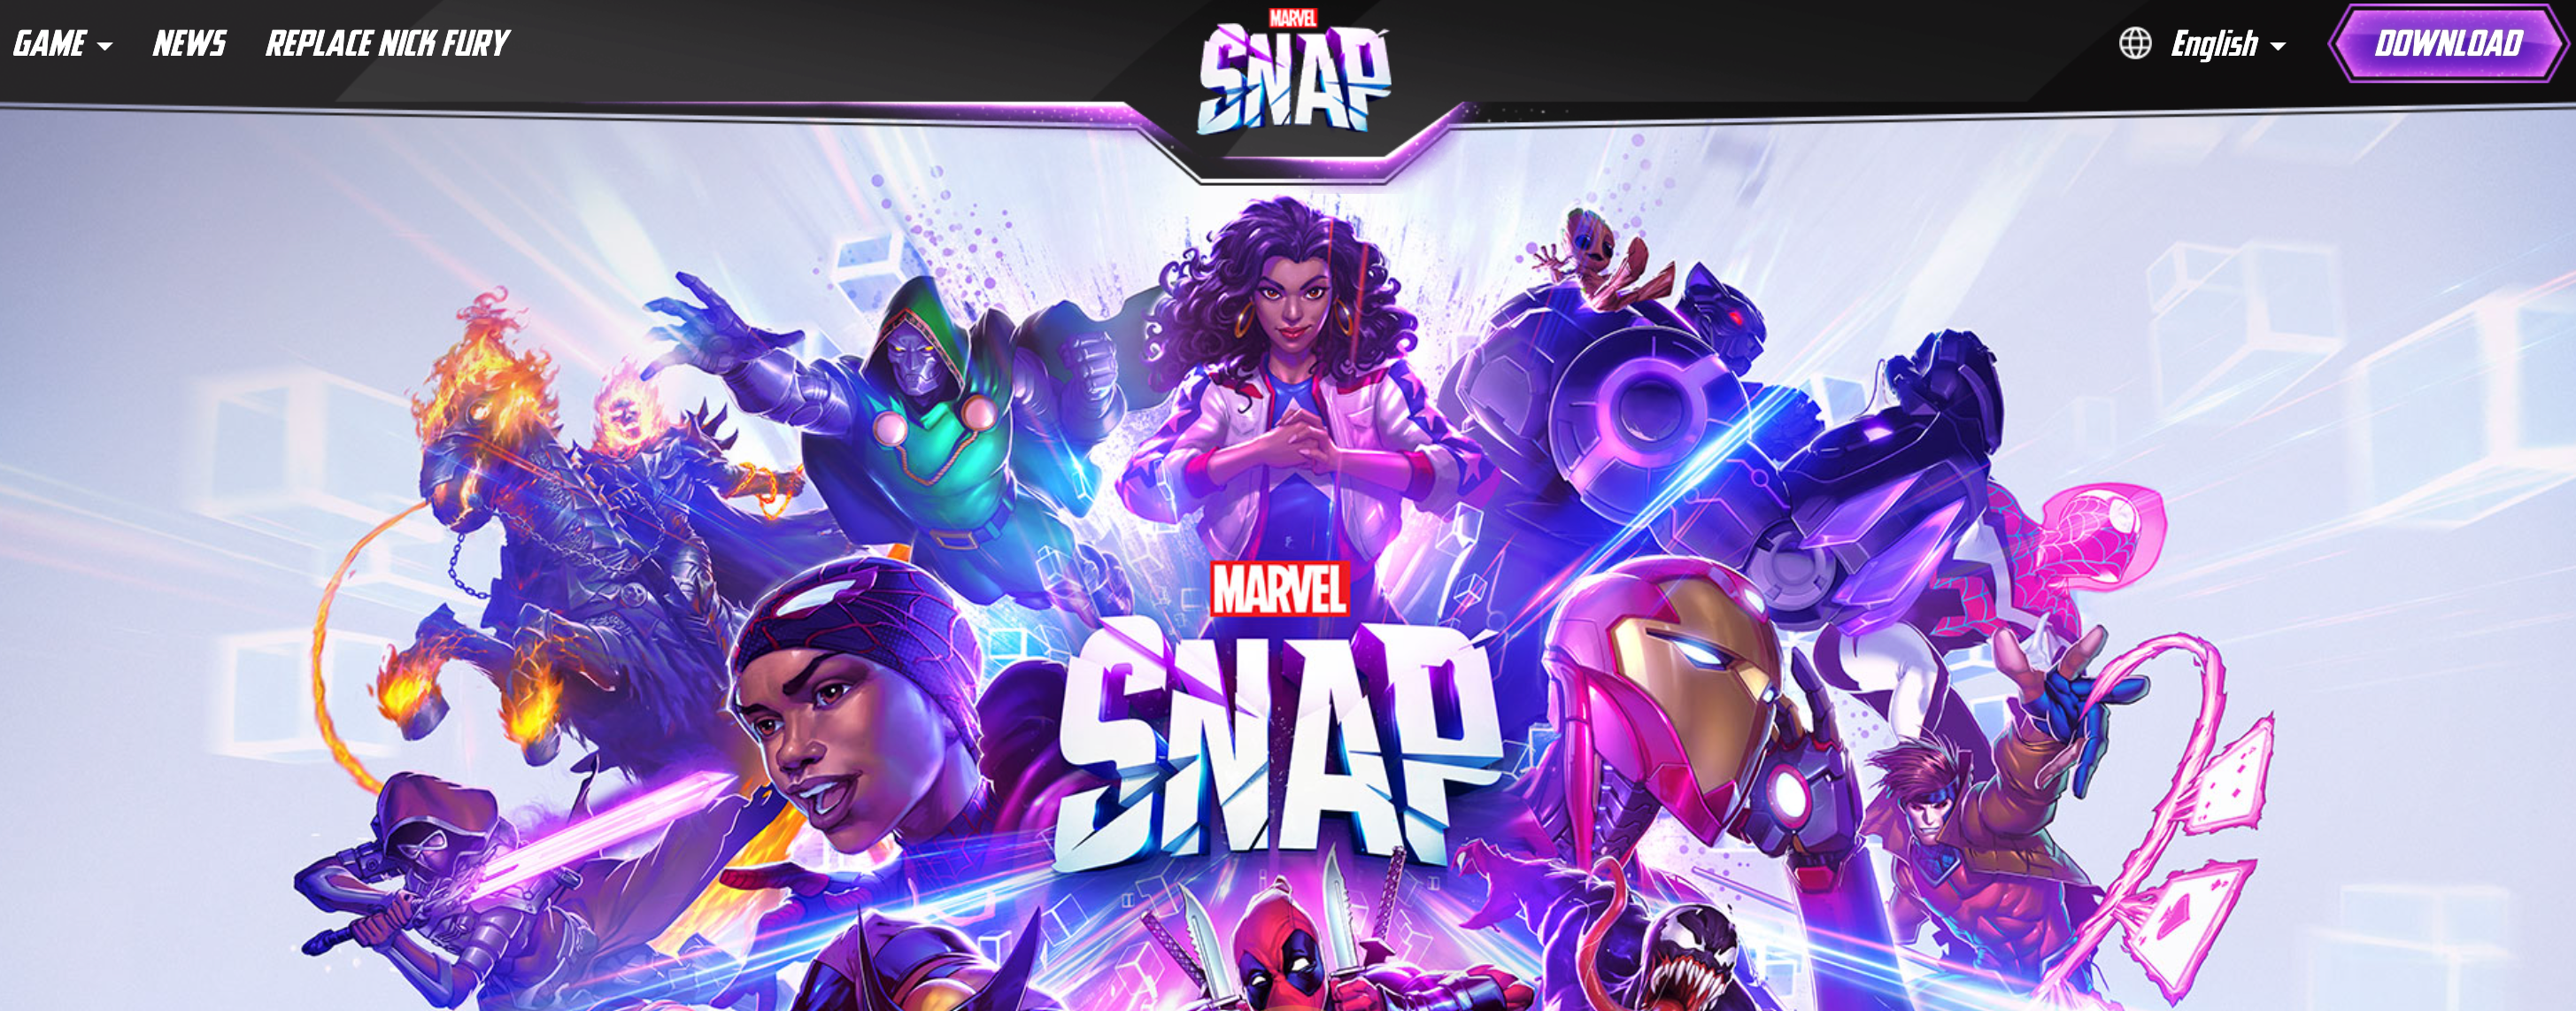 Marvel Snap downloadable game